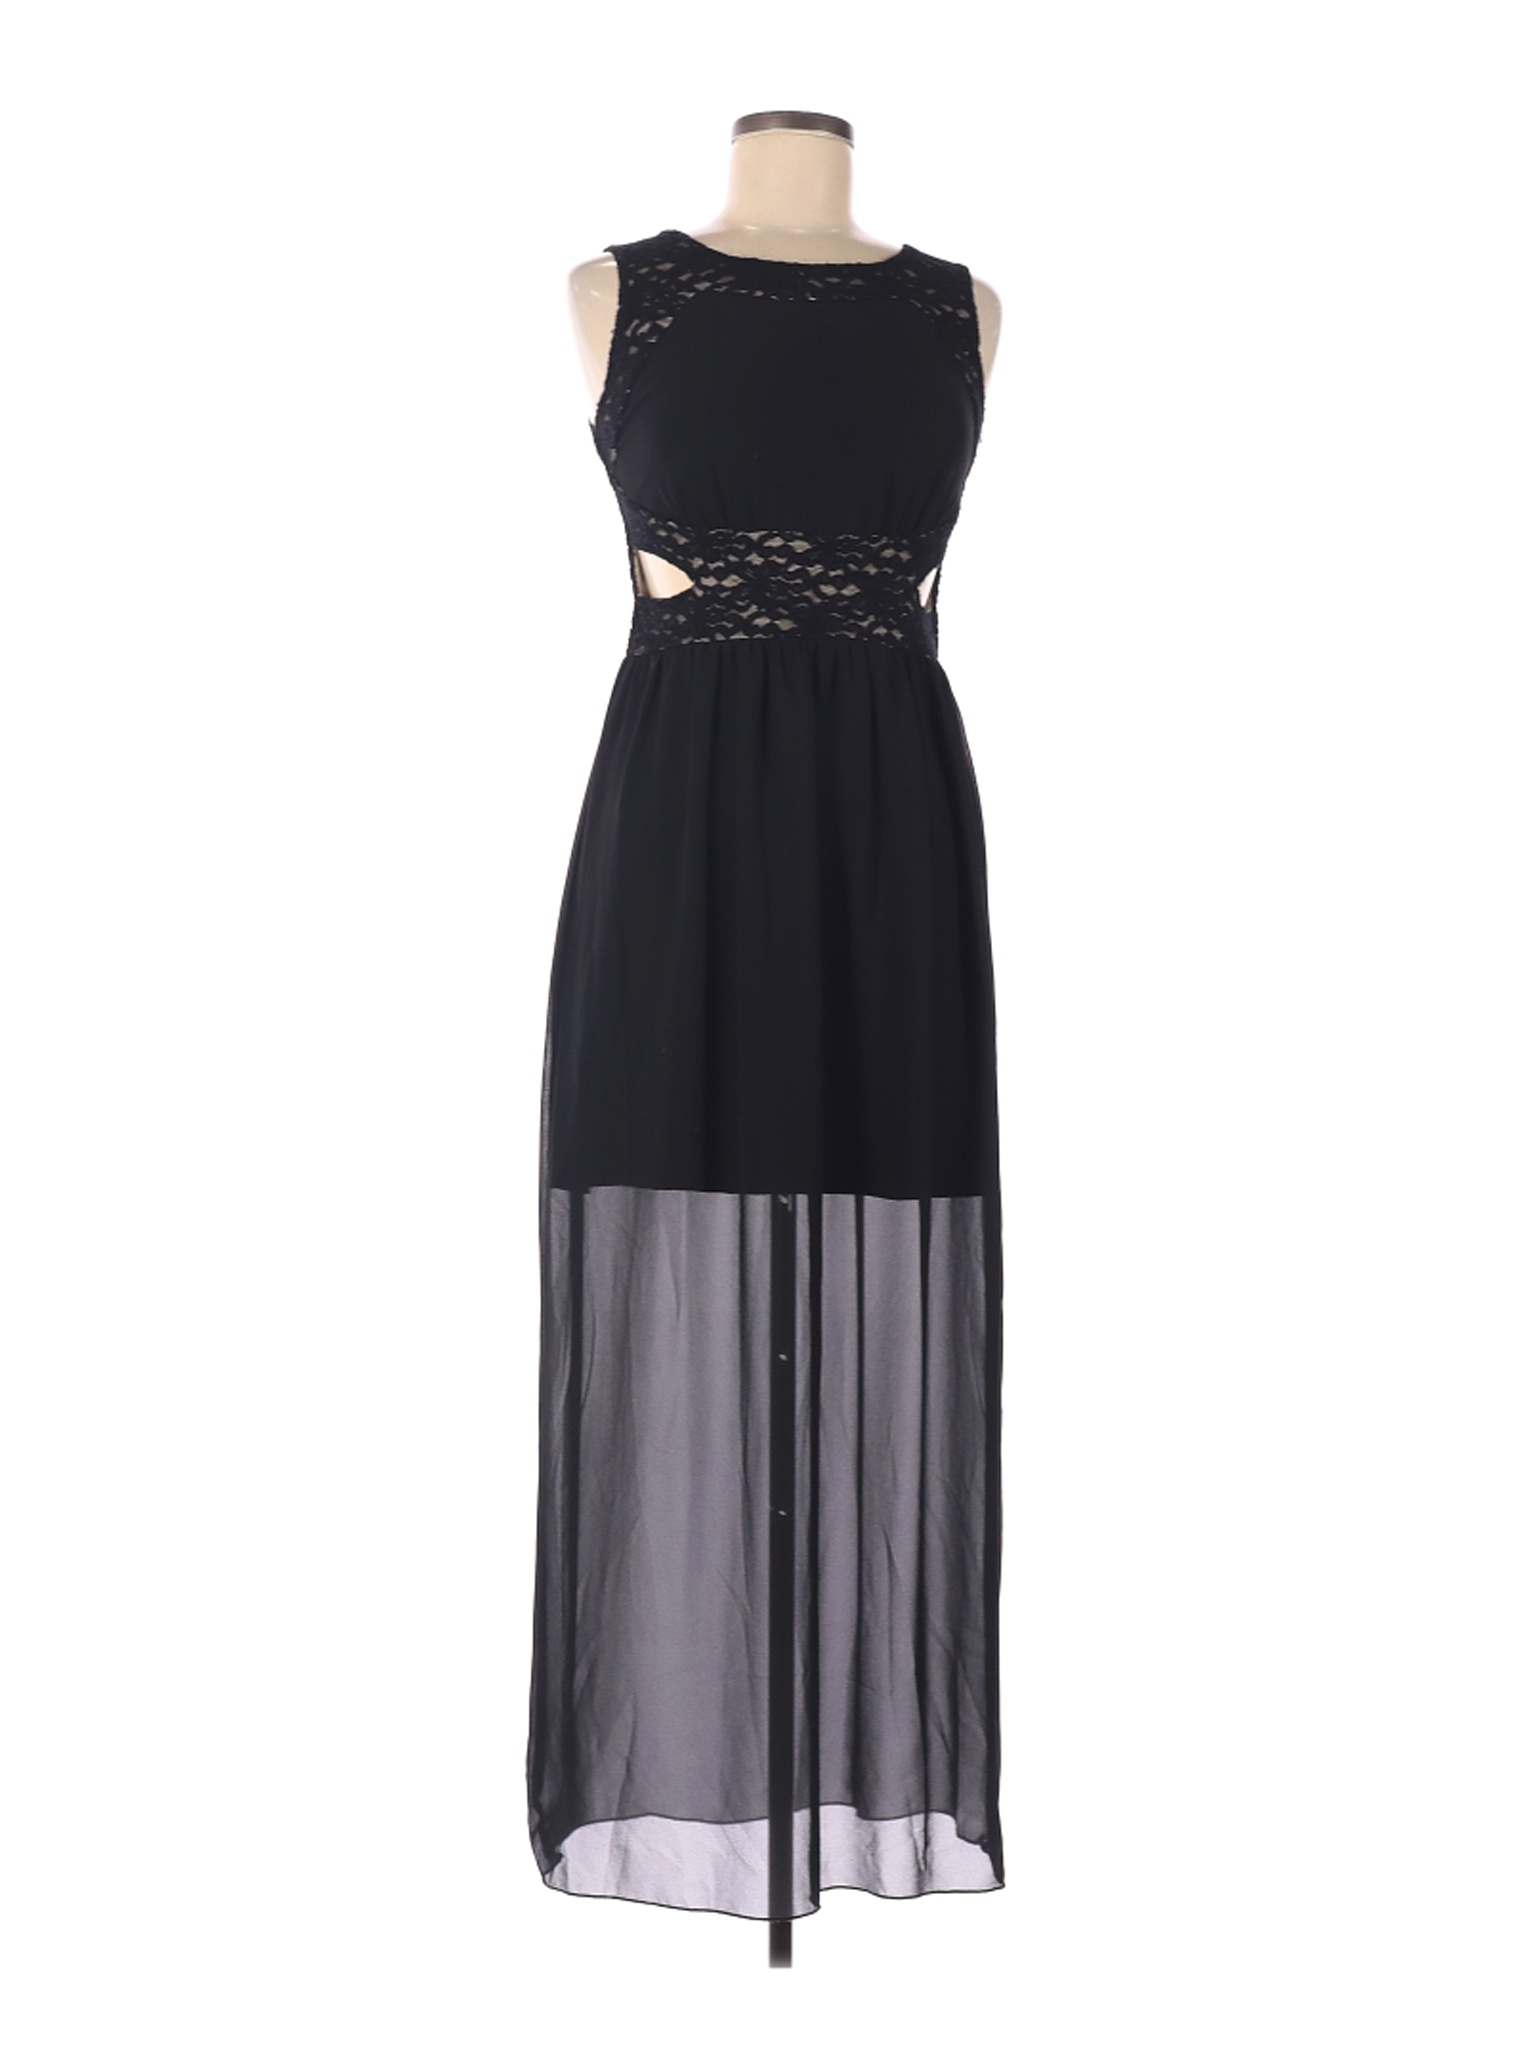 Sweet Storm Women Black Cocktail Dress M | eBay